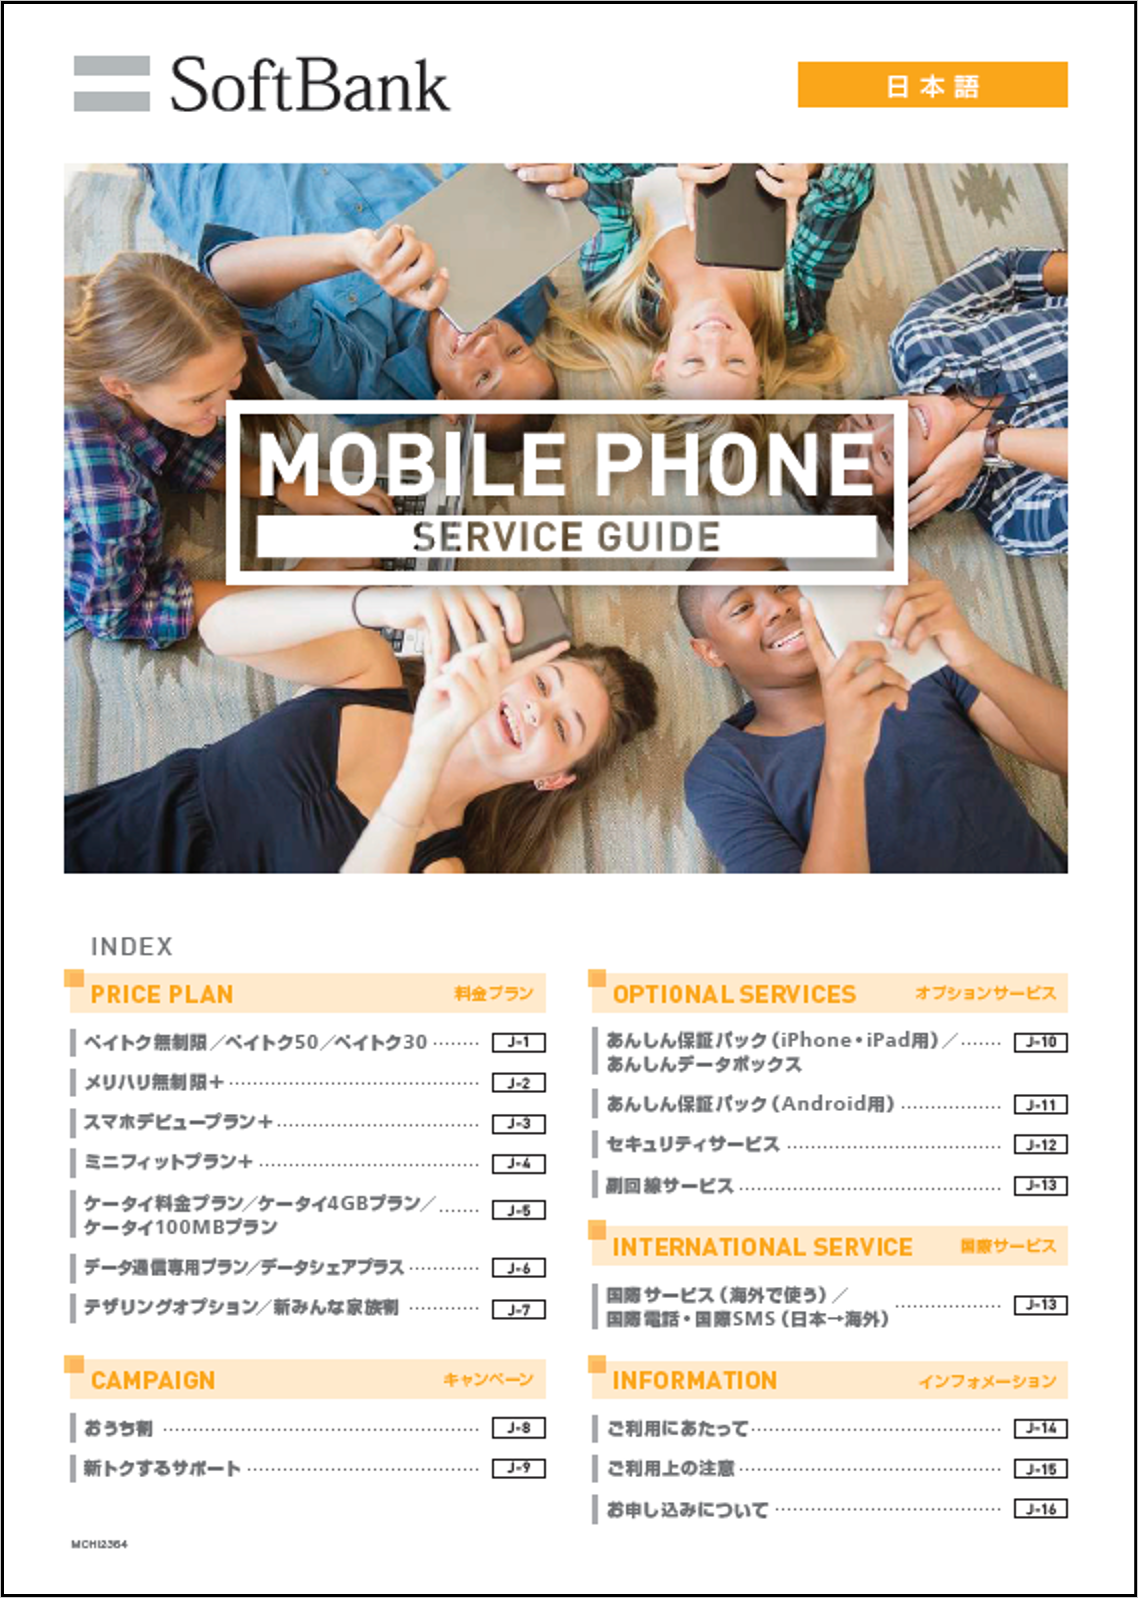 SoftBank Catalogue (日本語)